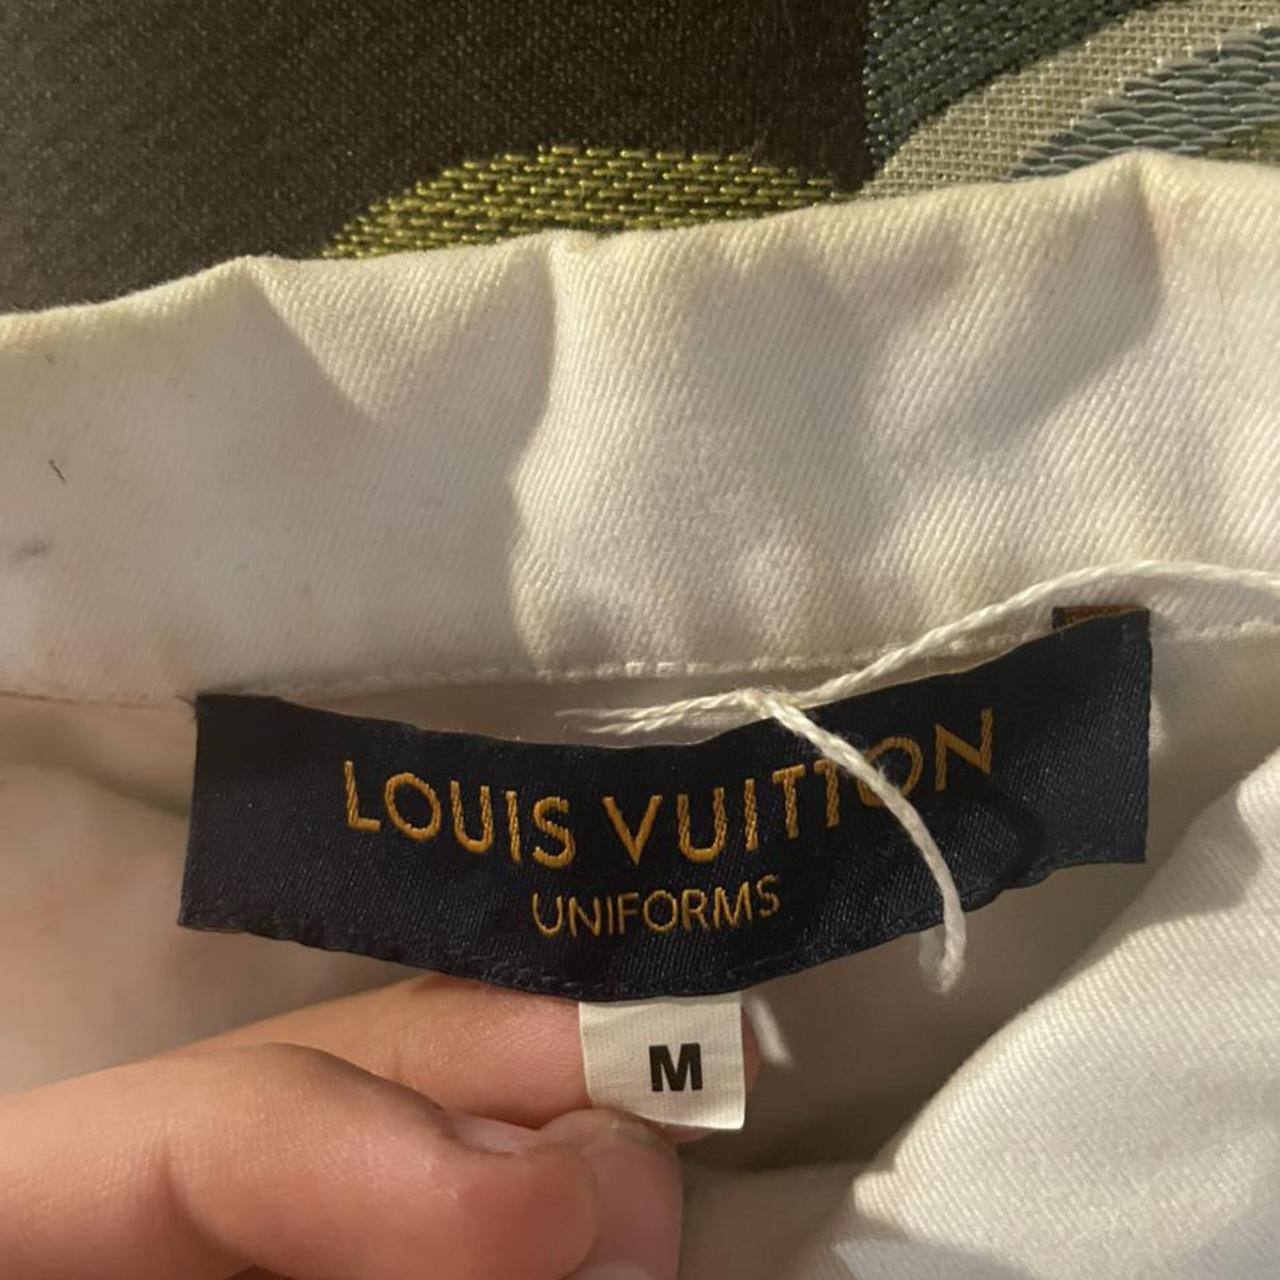 Louis Vuitton pants and shirt set extremely rare - Depop